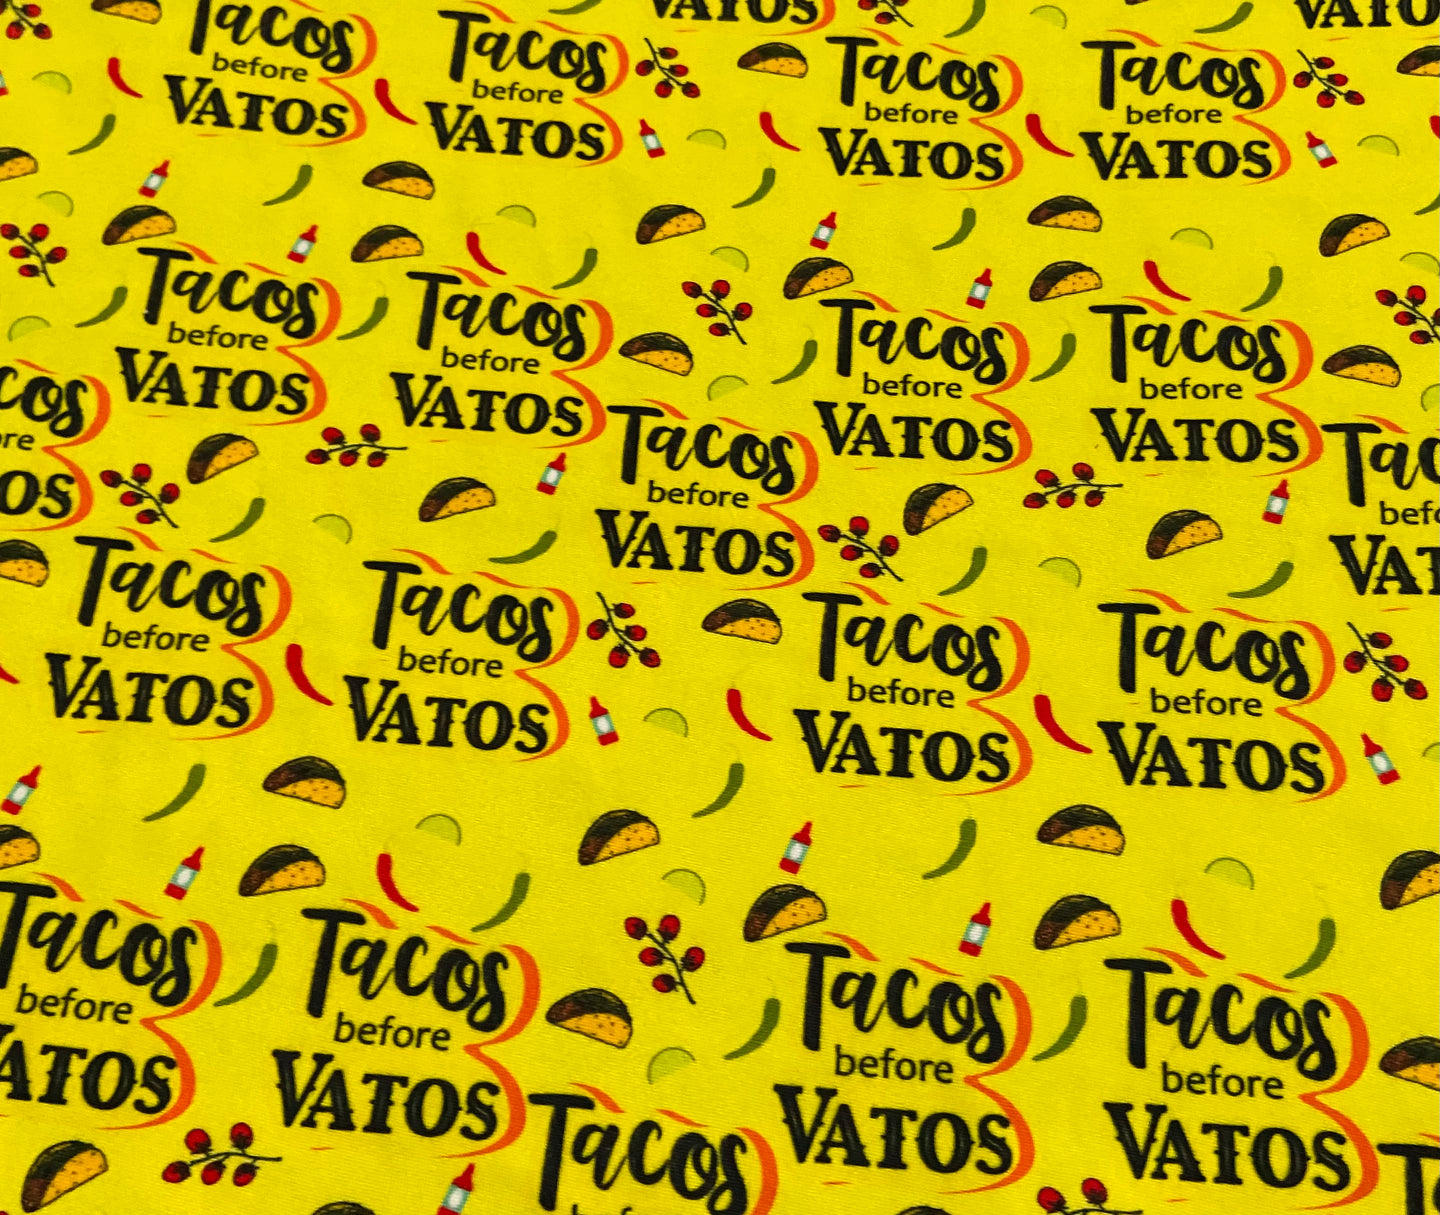 DBP Tacos Before Vatos